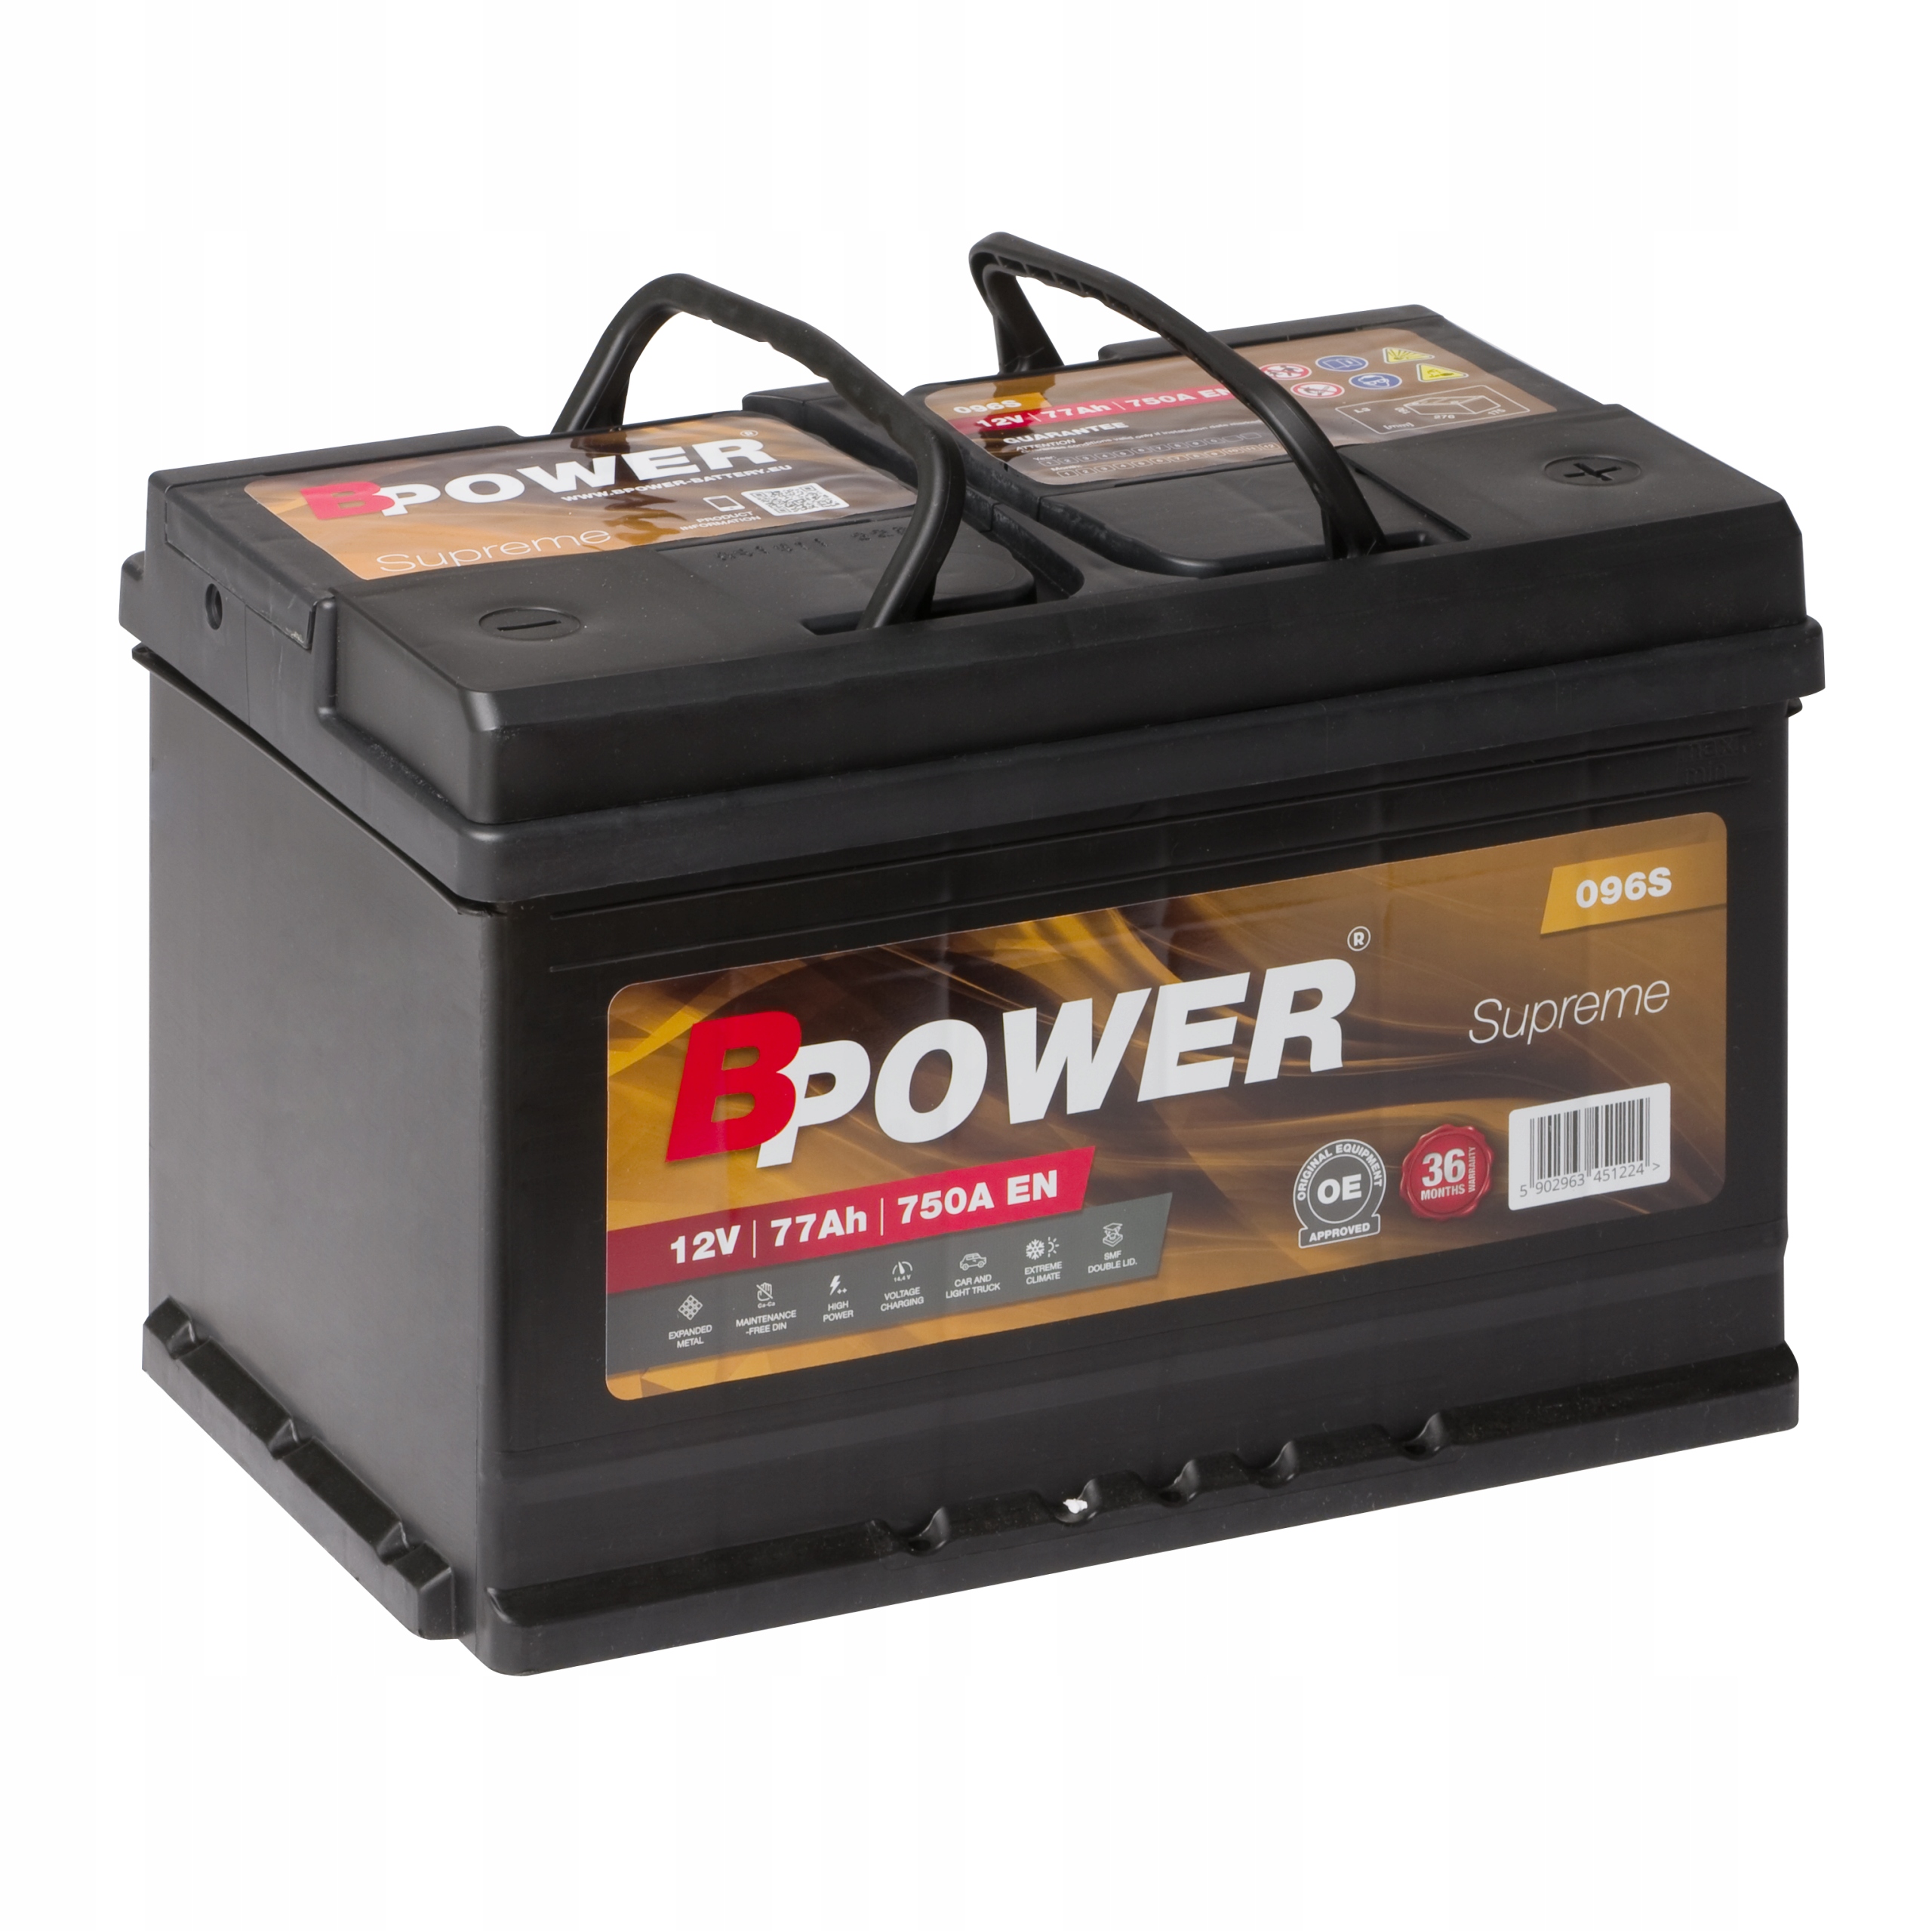 akumulator-bpower-096s-77ah-750a-7624882429-allegro-pl